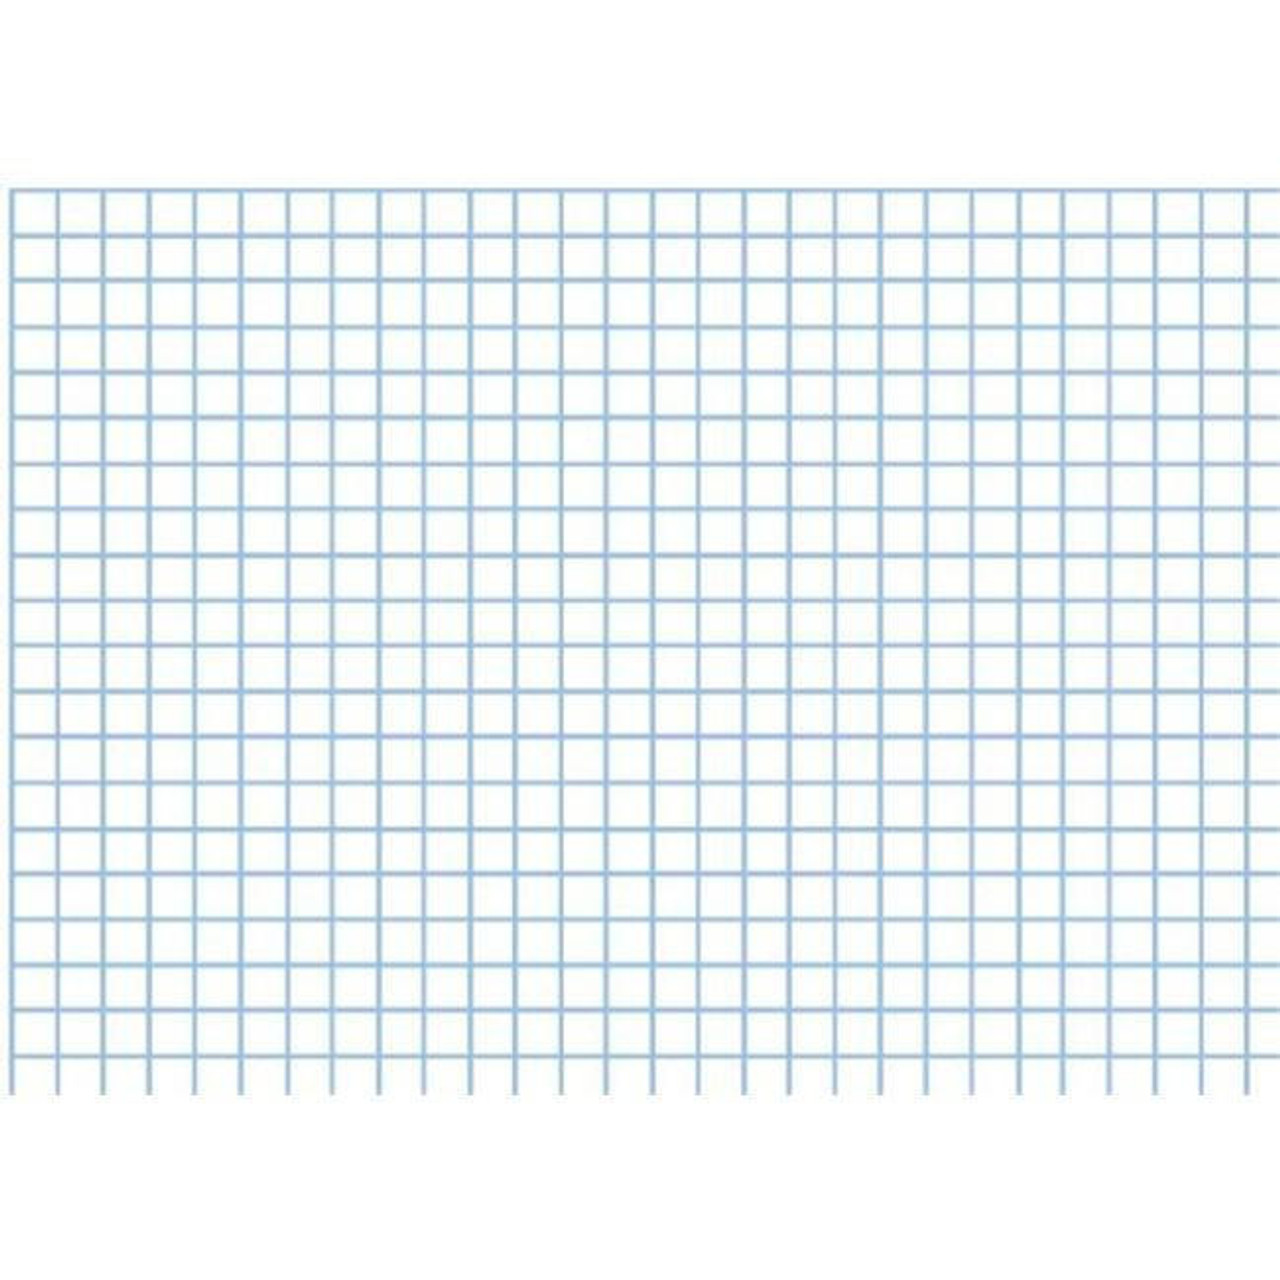 Bienfang - Cross Section Paper Pad - 4x4 grid -8.5 x 11 - Sam Flax Atlanta